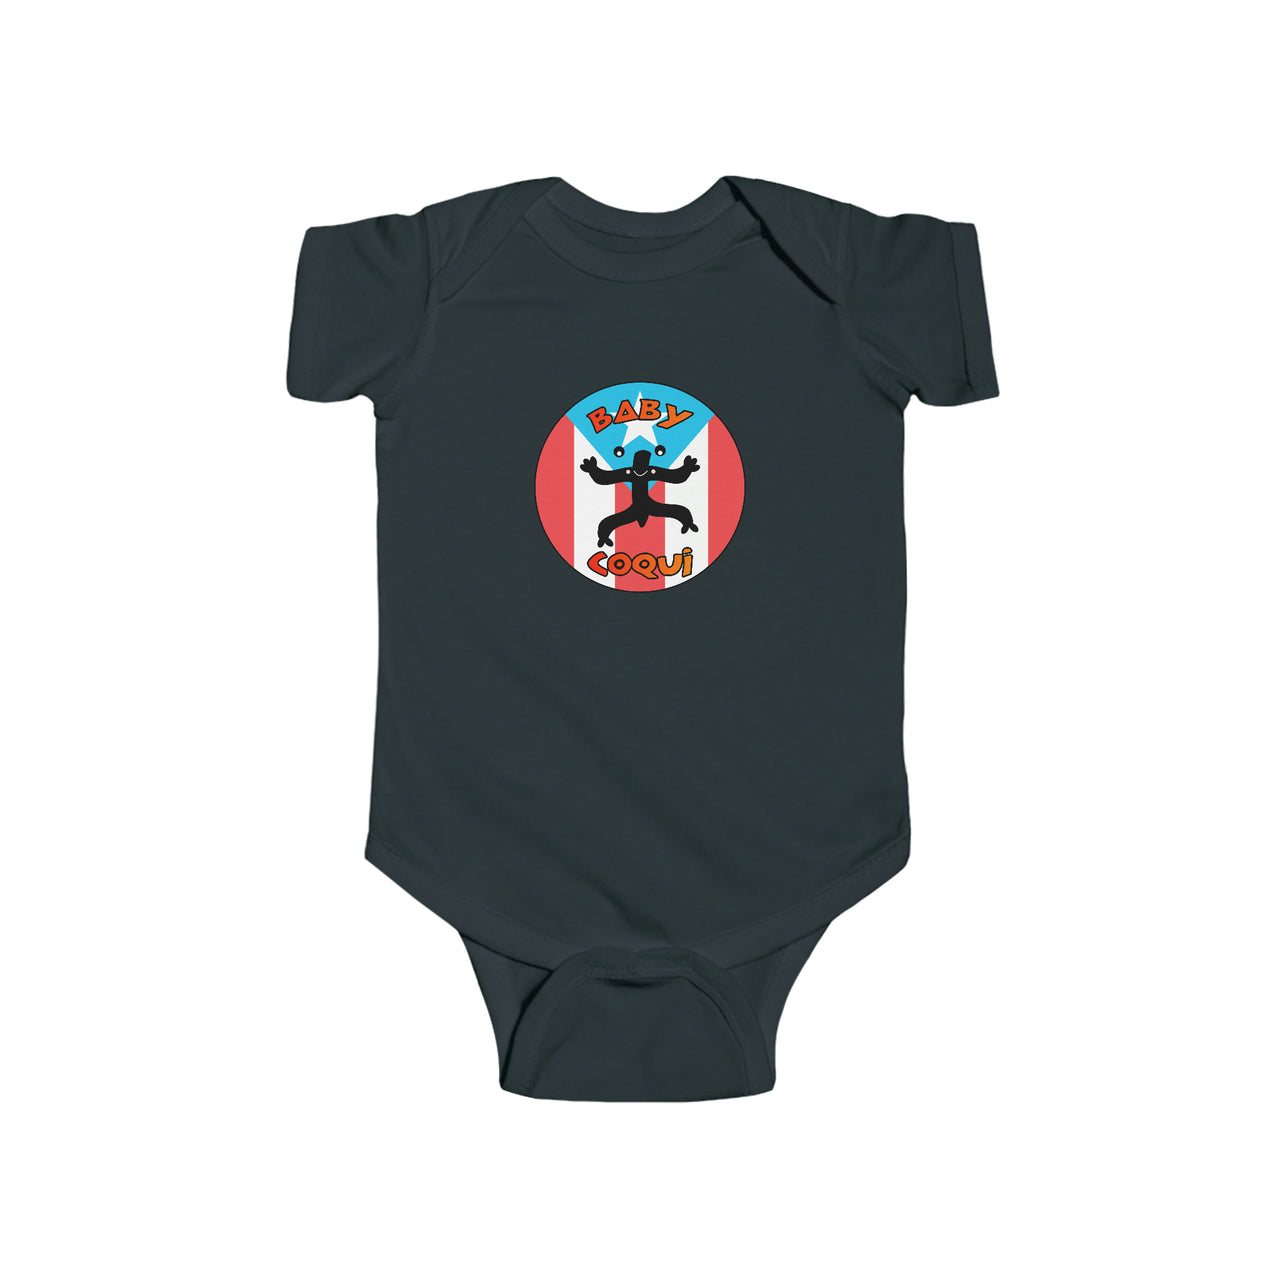 Baby Coqui - Infant Fine Jersey Bodysuit